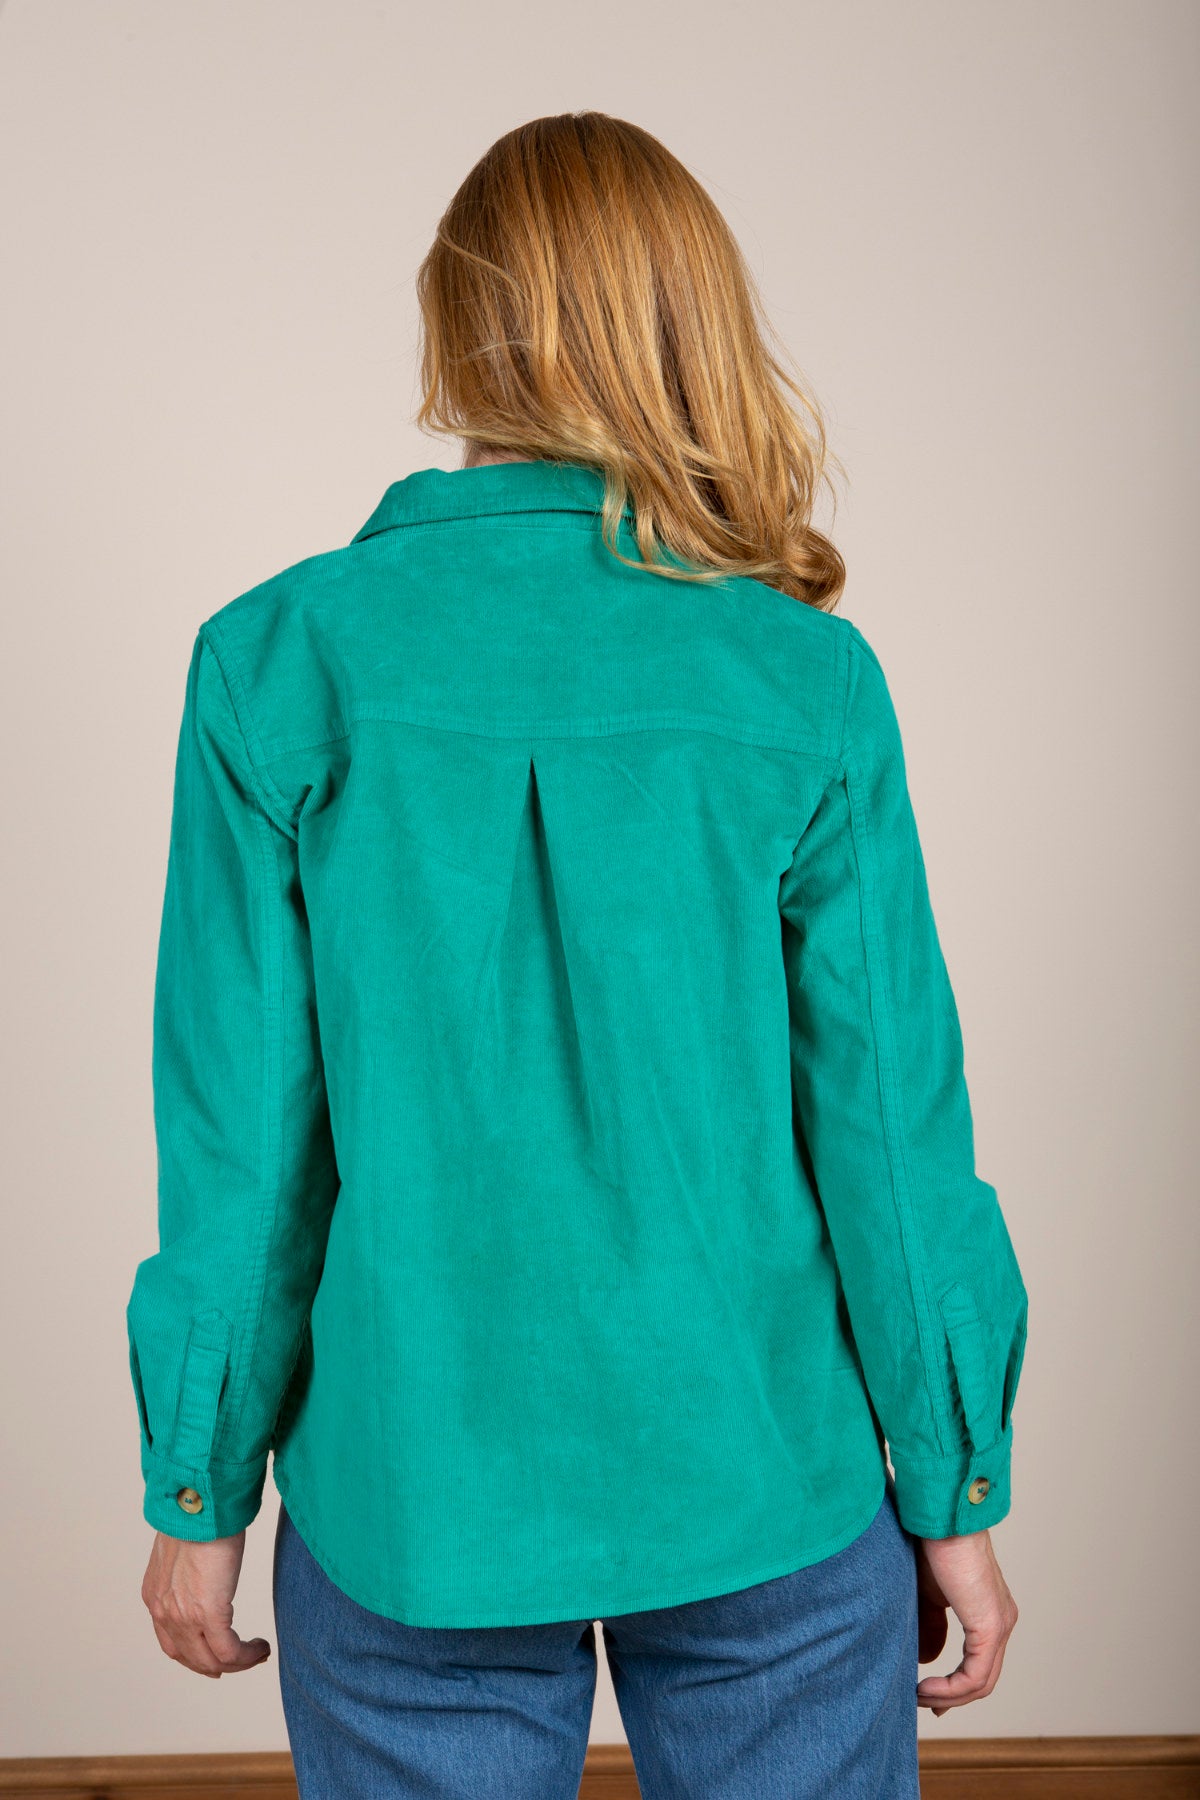 Pincot jacket, emerald